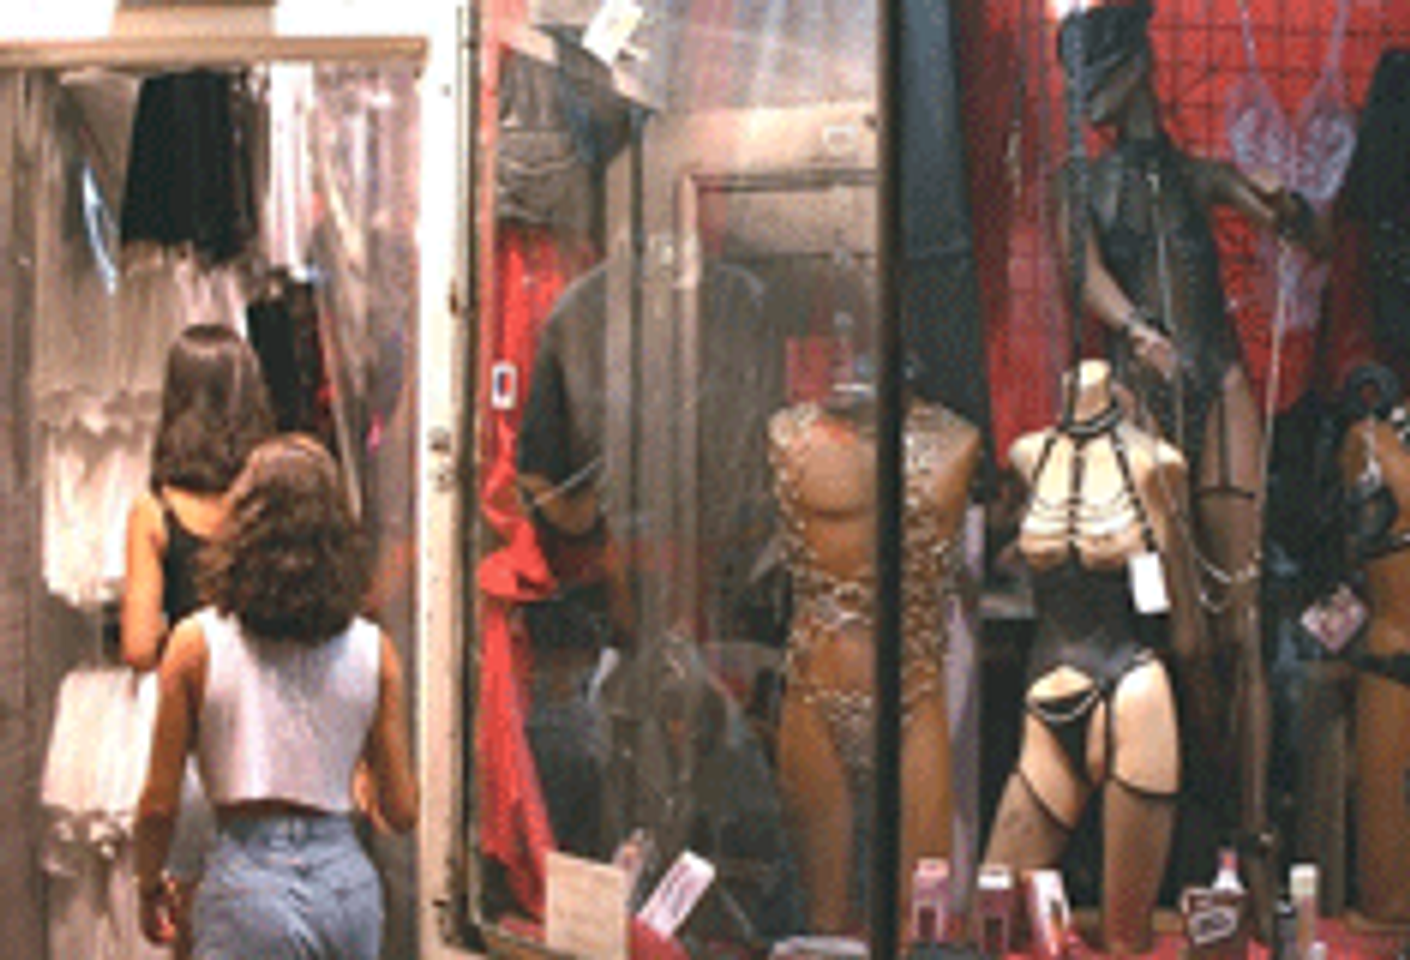 Prospective UK Sex Shop Garners Criticism